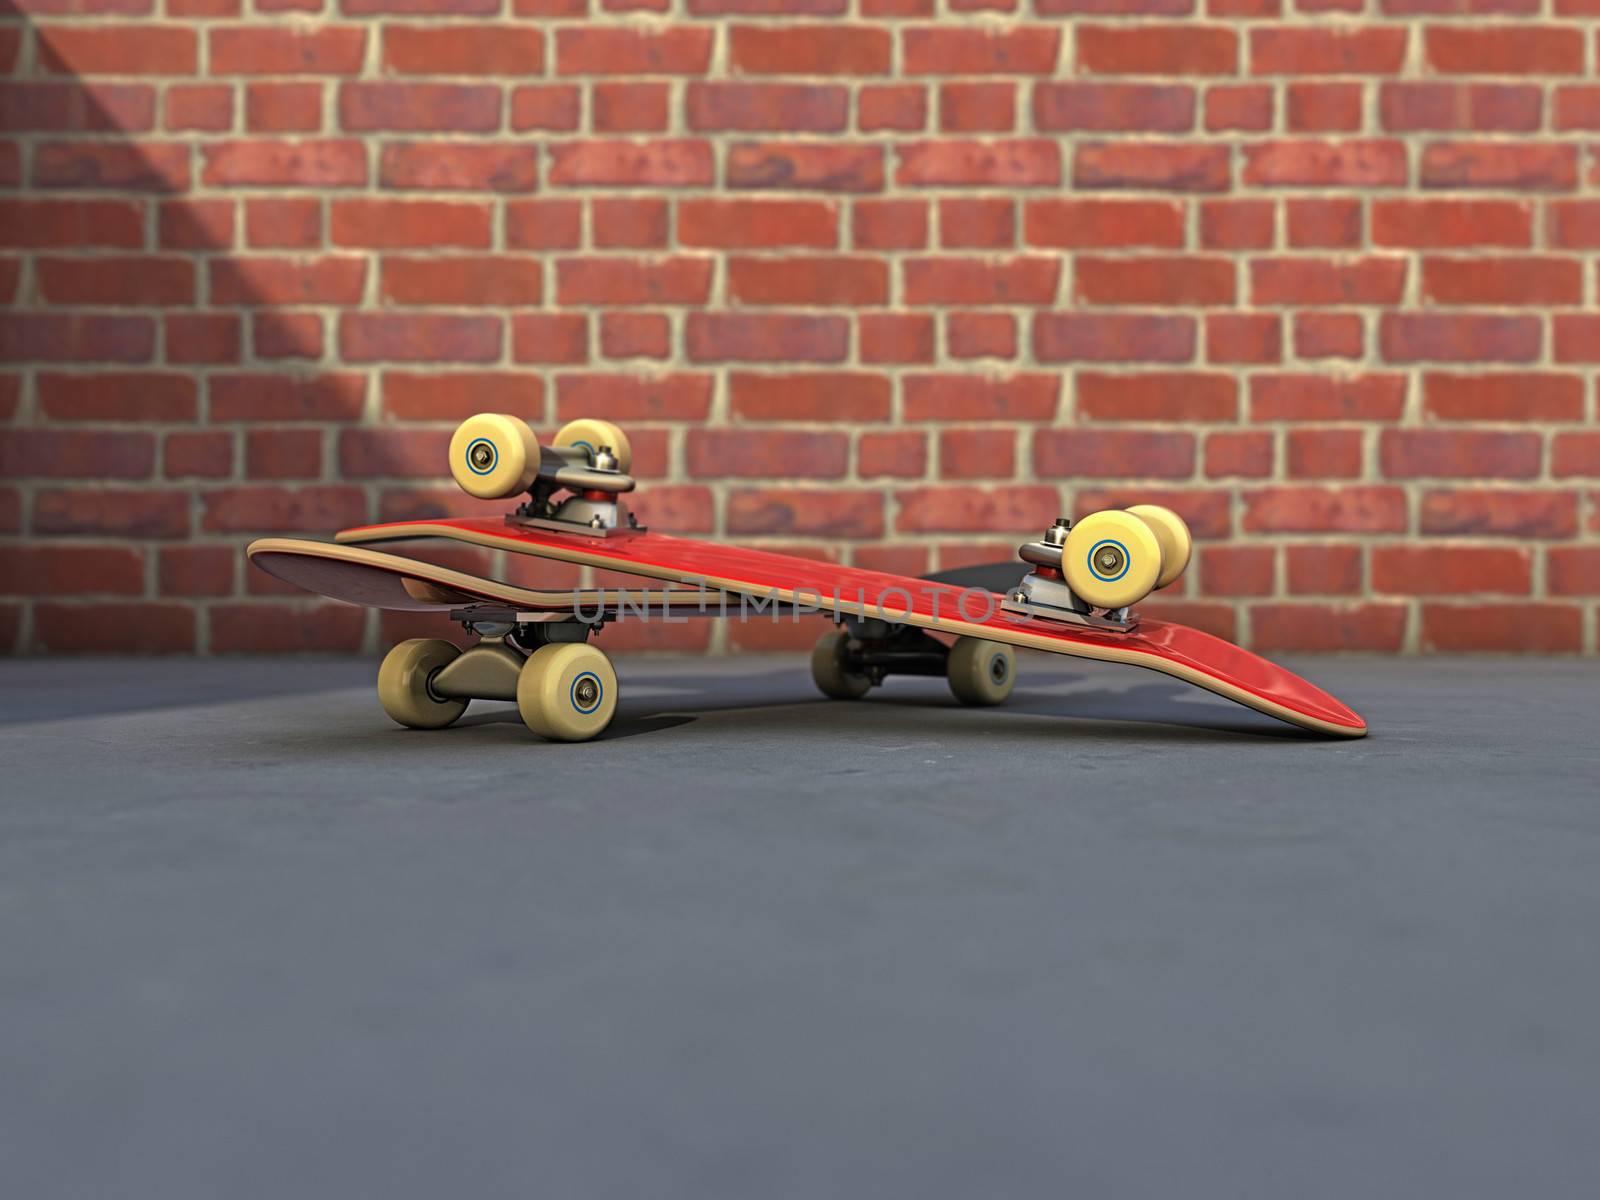 Skateboard composition on a street